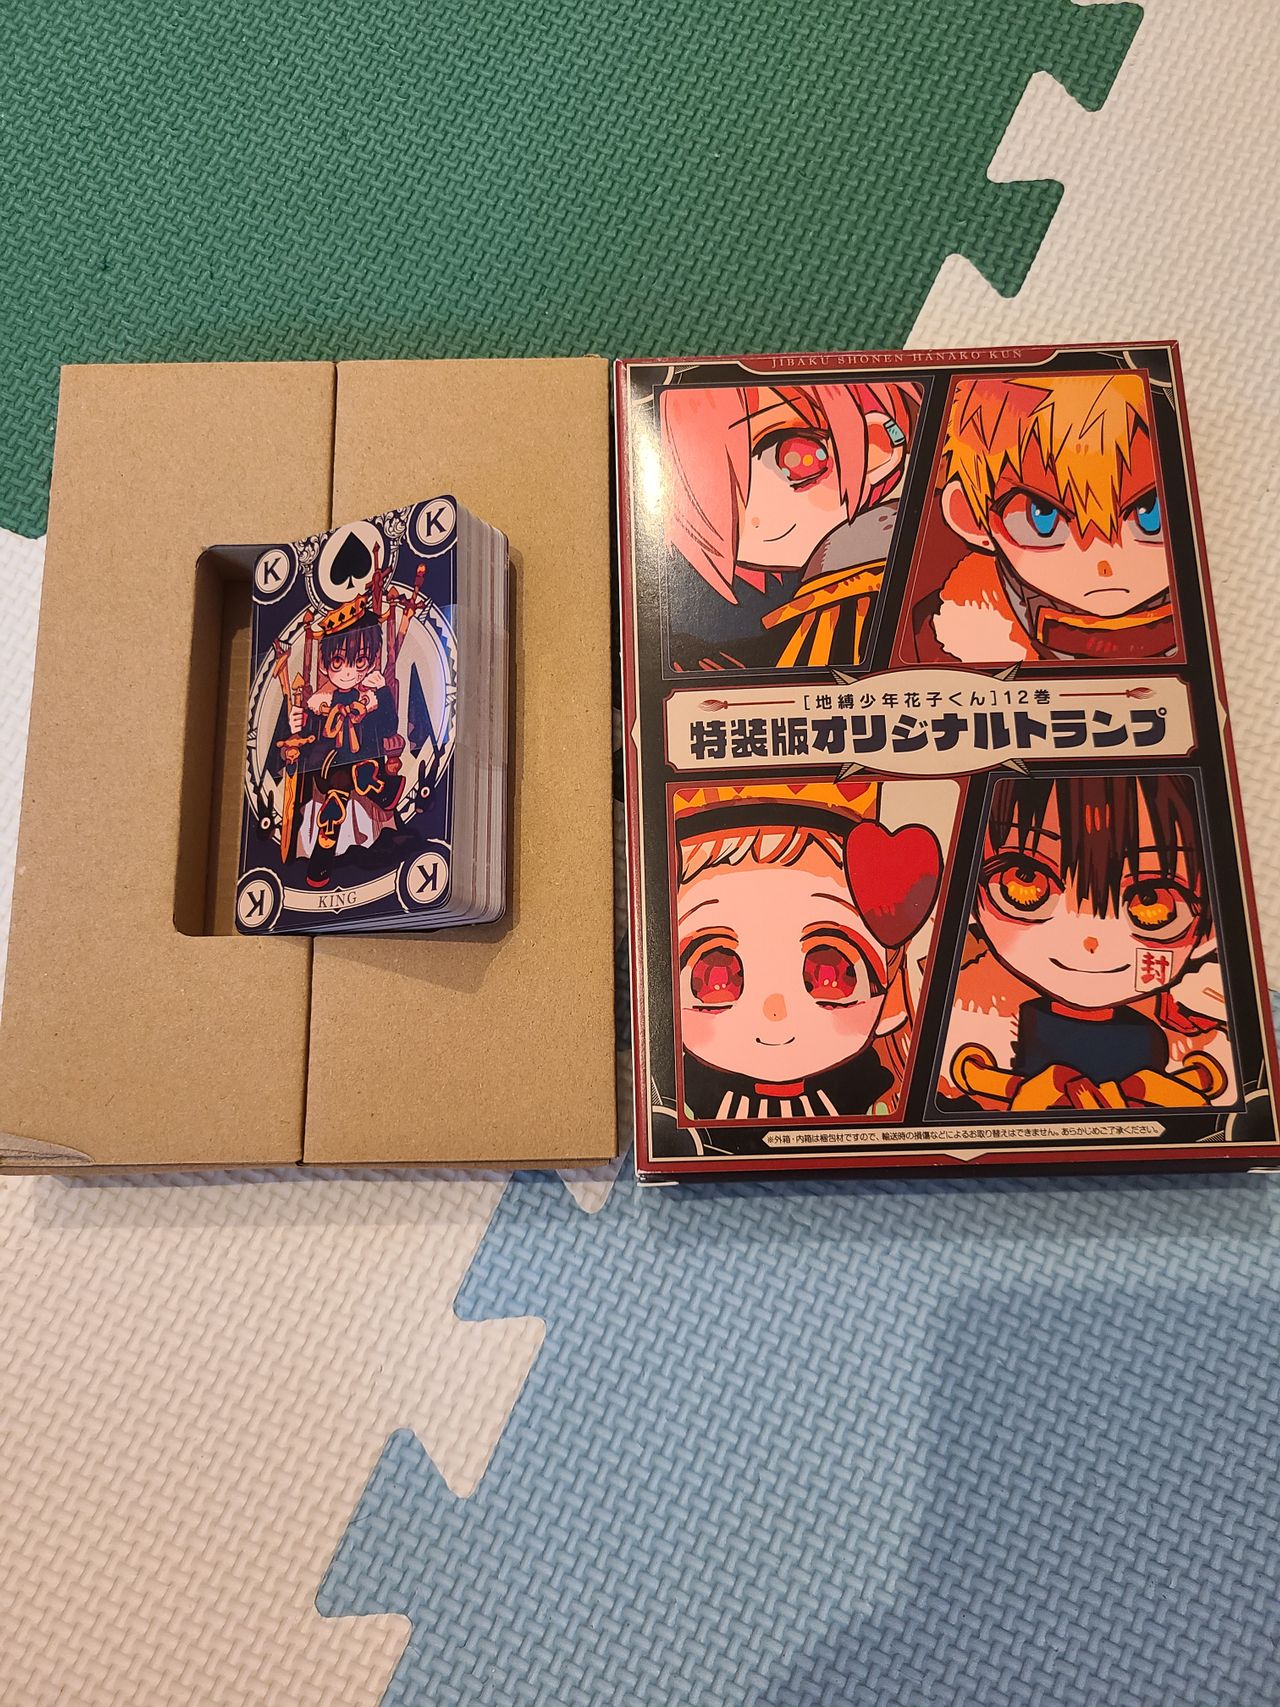 Details about   Jibaku Shonen Hanako-kun Playing cards Manga Anime Aidairo Japan